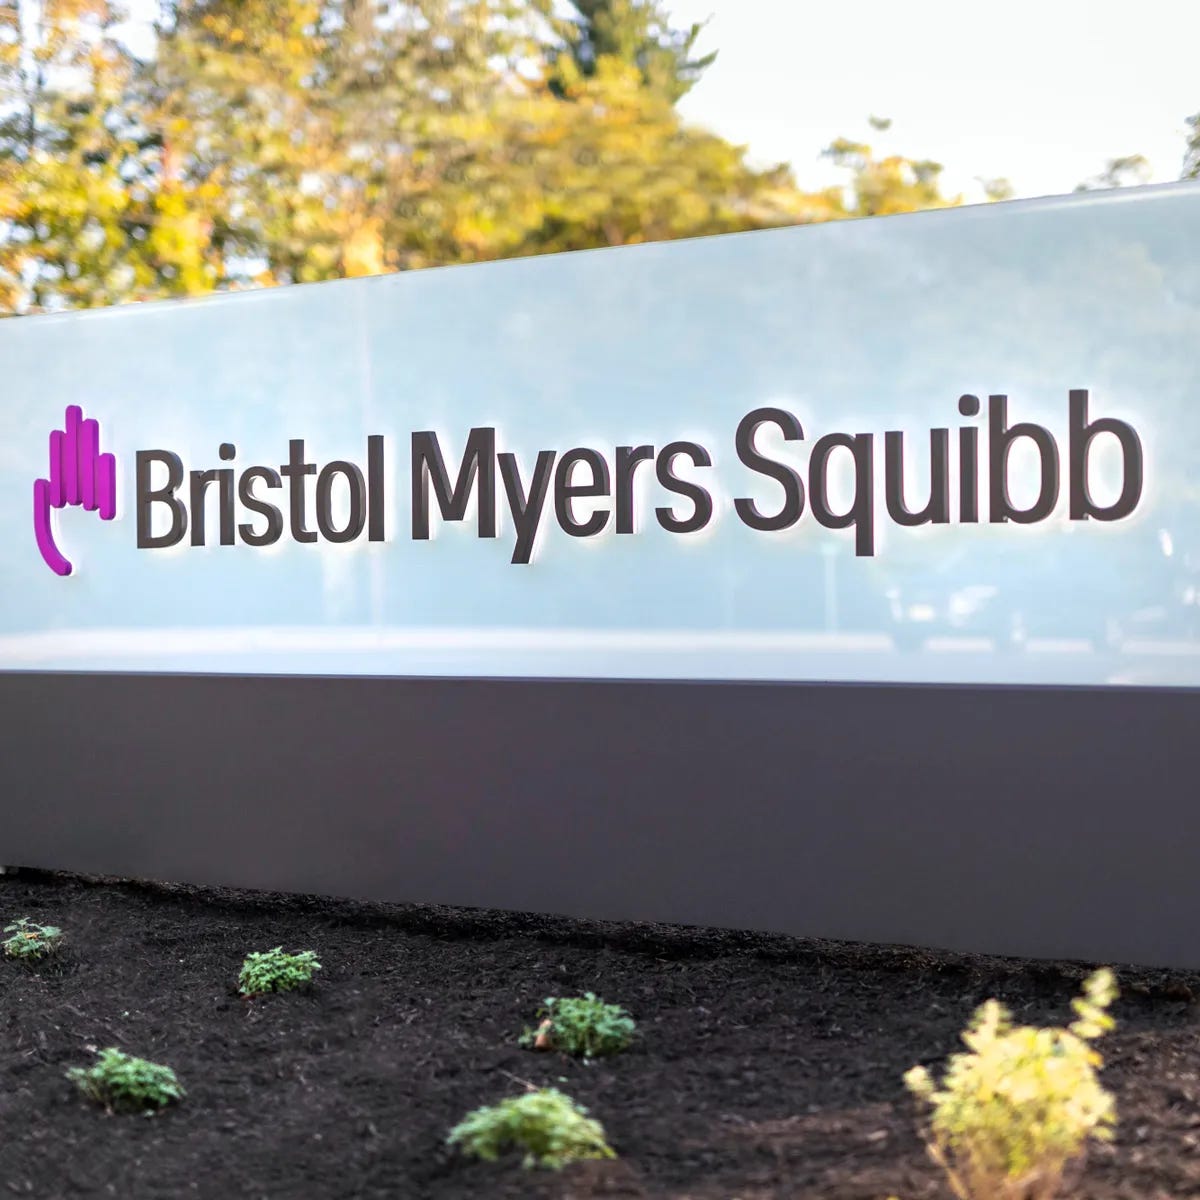 Bristol Myers to cut 6% of workforce, trim drug pipeline